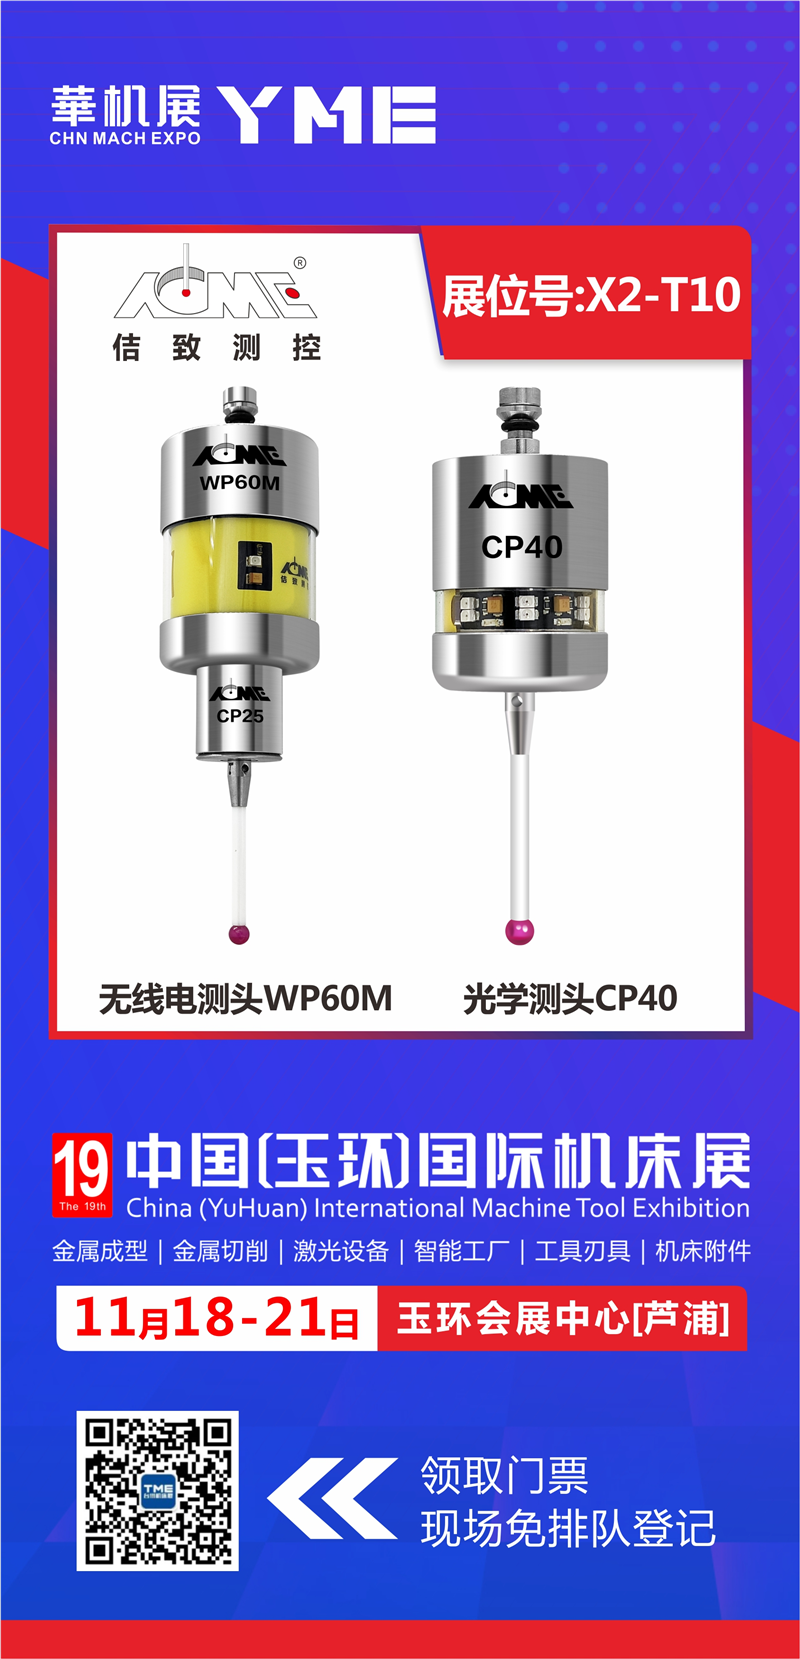 Imbitasyon sa 19th China (Yuhuan) International Machine Tool Exhibition 2022 (2)